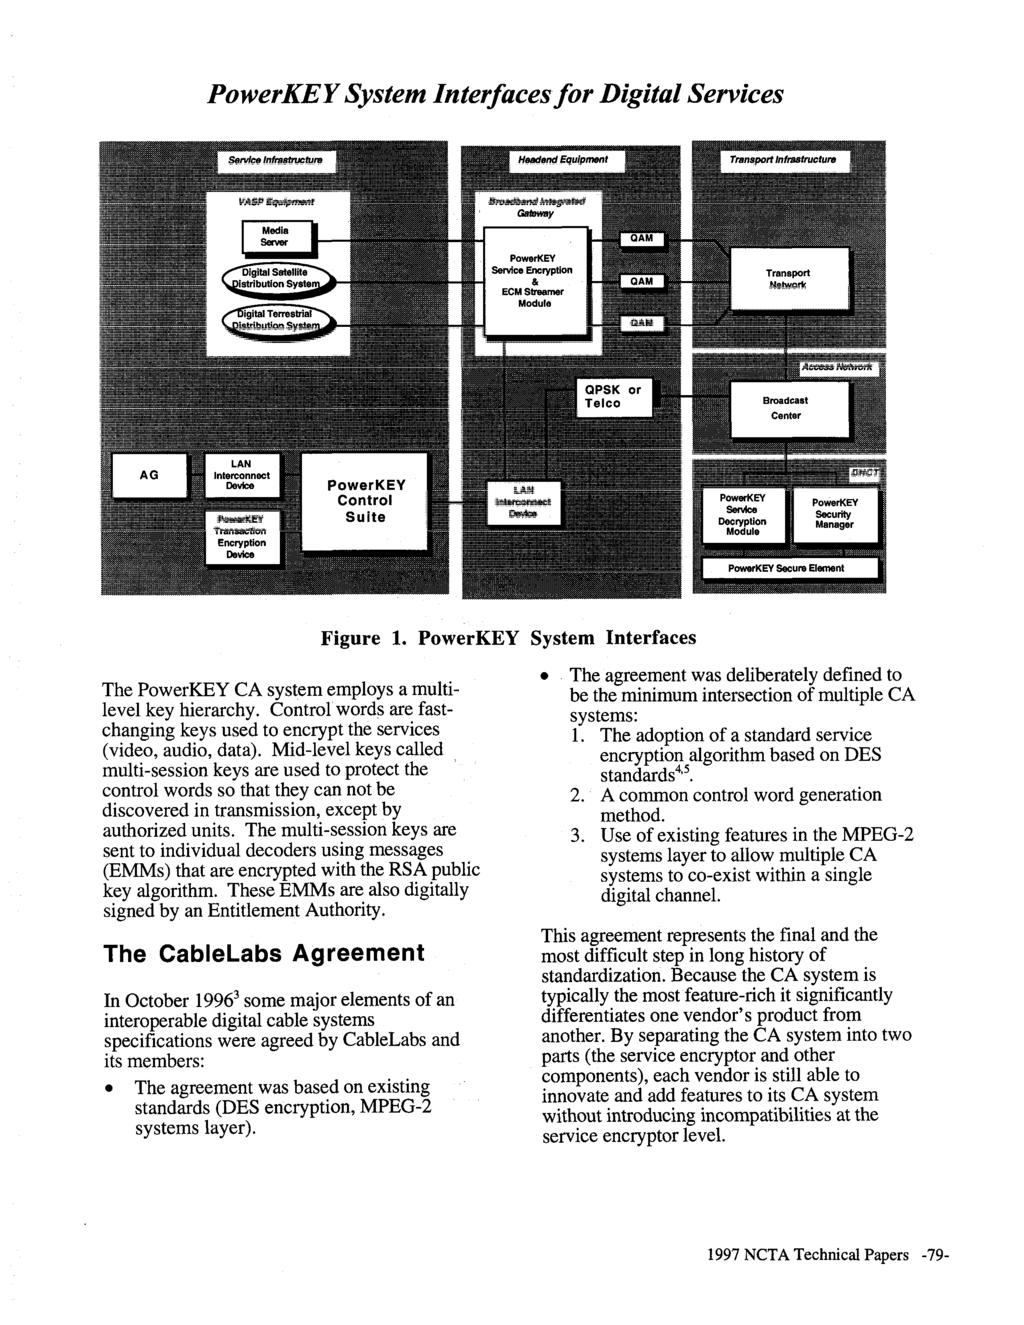 Power KEY System lnterfacesfor Digital Services PowerKEY Service Encryption & ECM Streamer Module Figure 1. PowerKEY System Interfaces The PowerKEY CA system employs a multilevel key hierarchy.